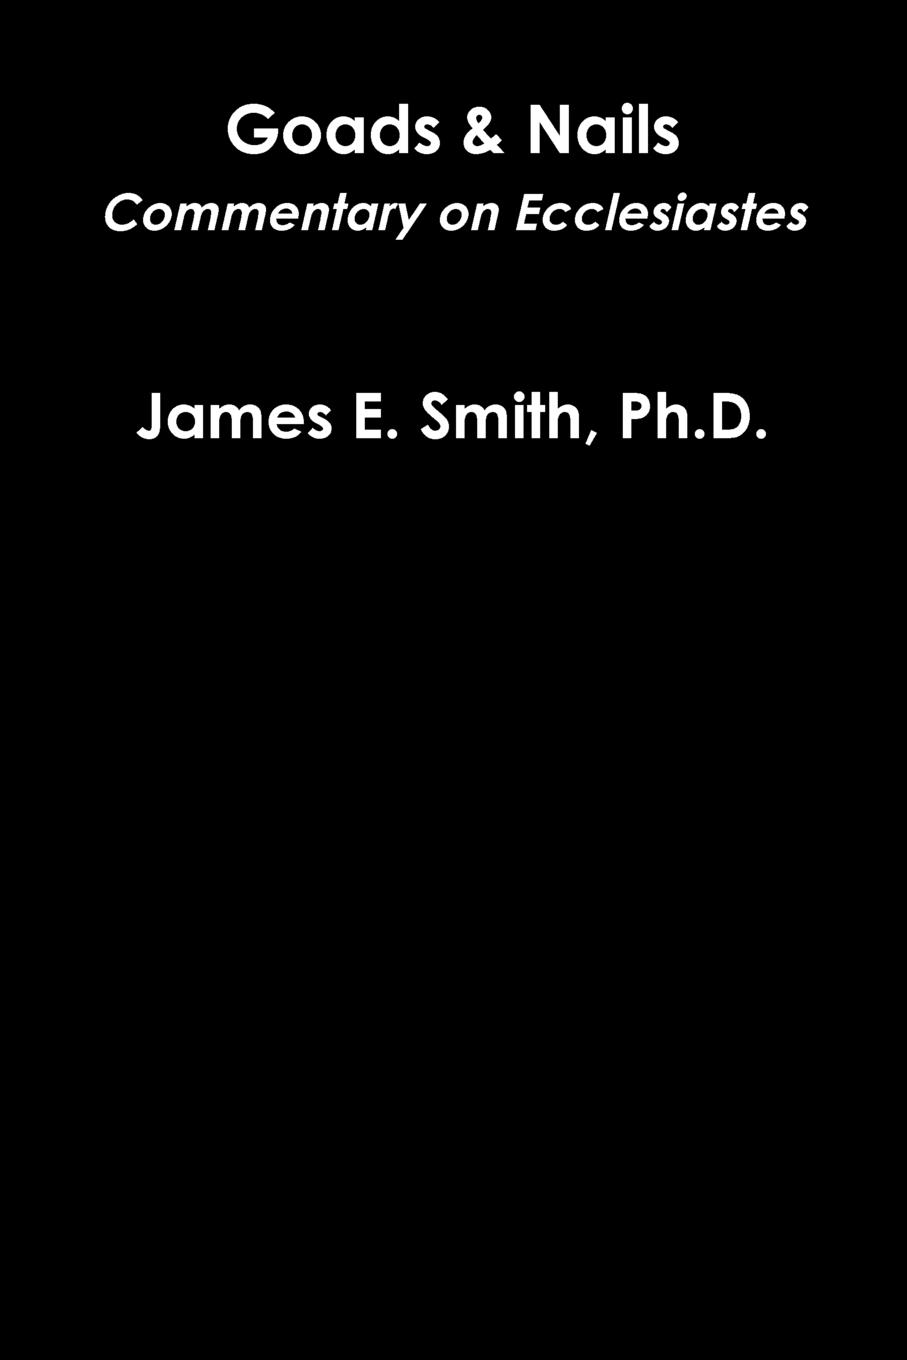 Ph.D. James E. Smith Goads and Nails